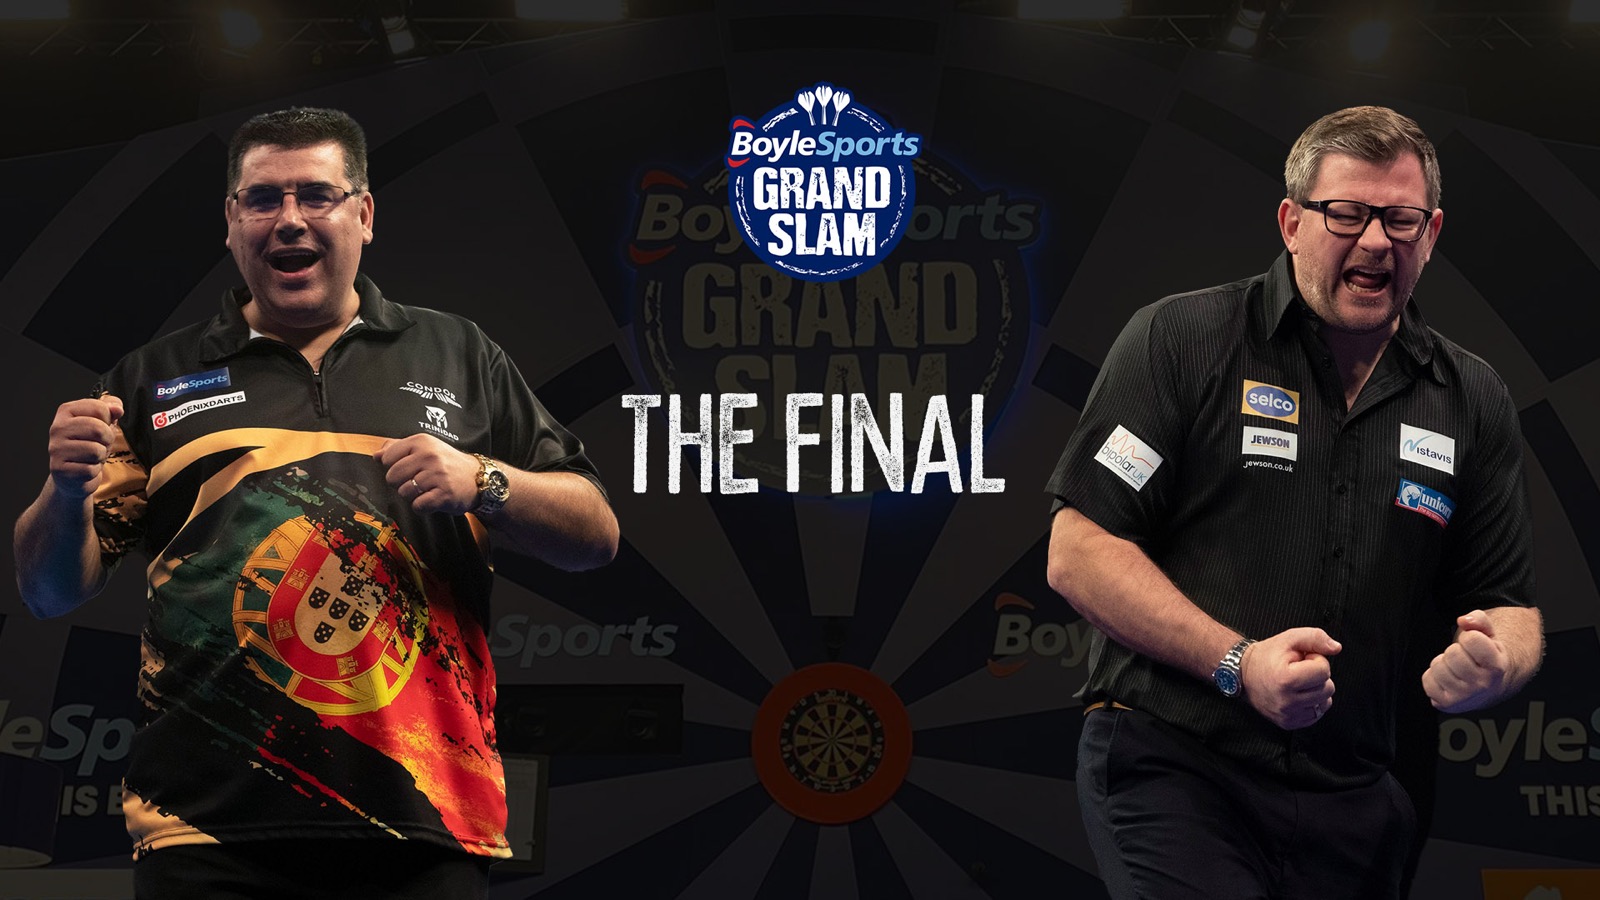 Boylesports Grand Slam of Darts Live Blog: The Final